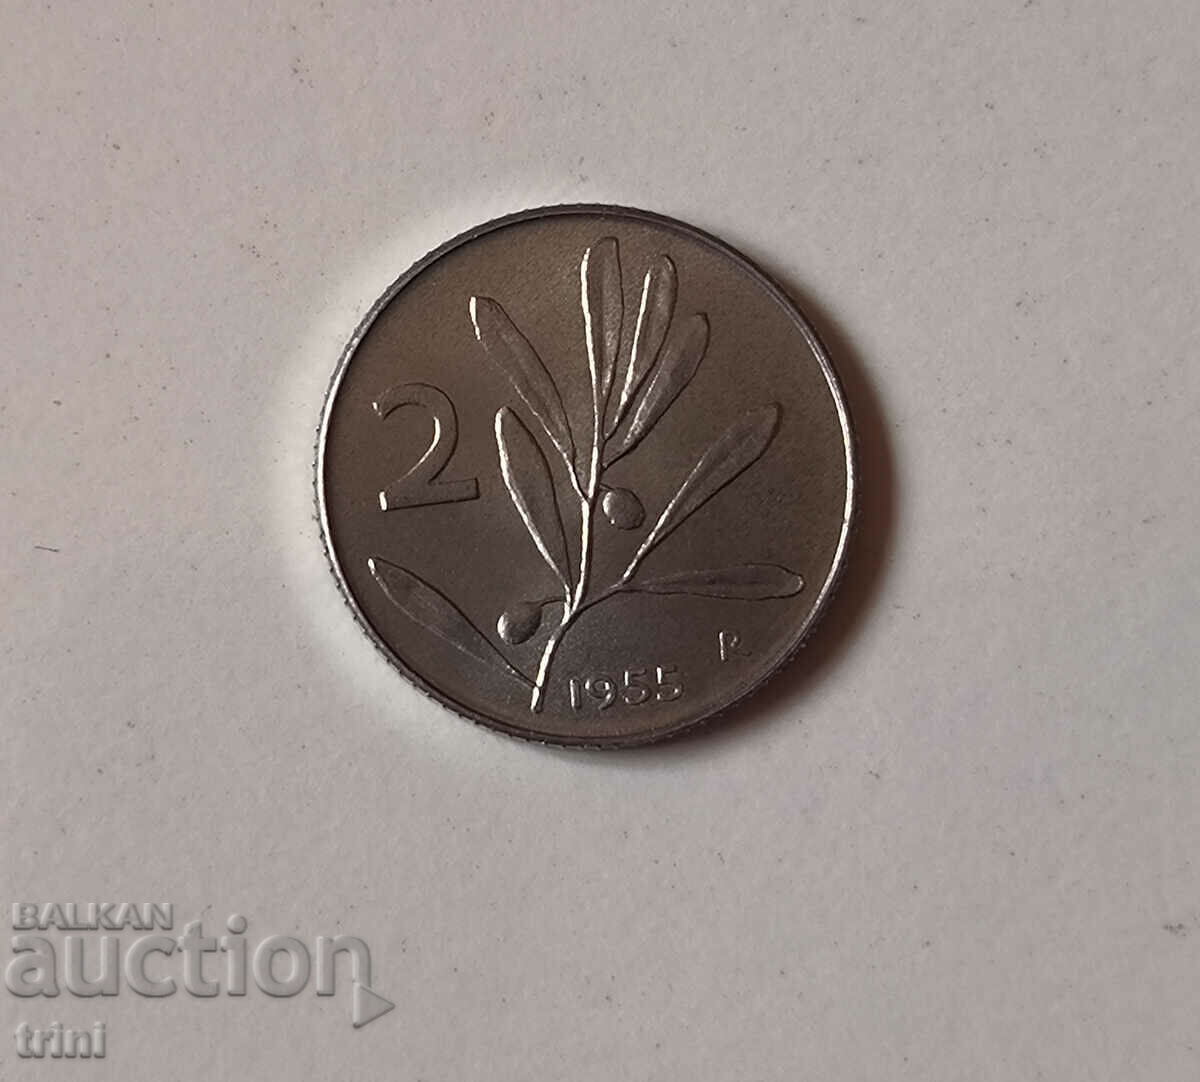 Italia 2 lire 1955 anul g103